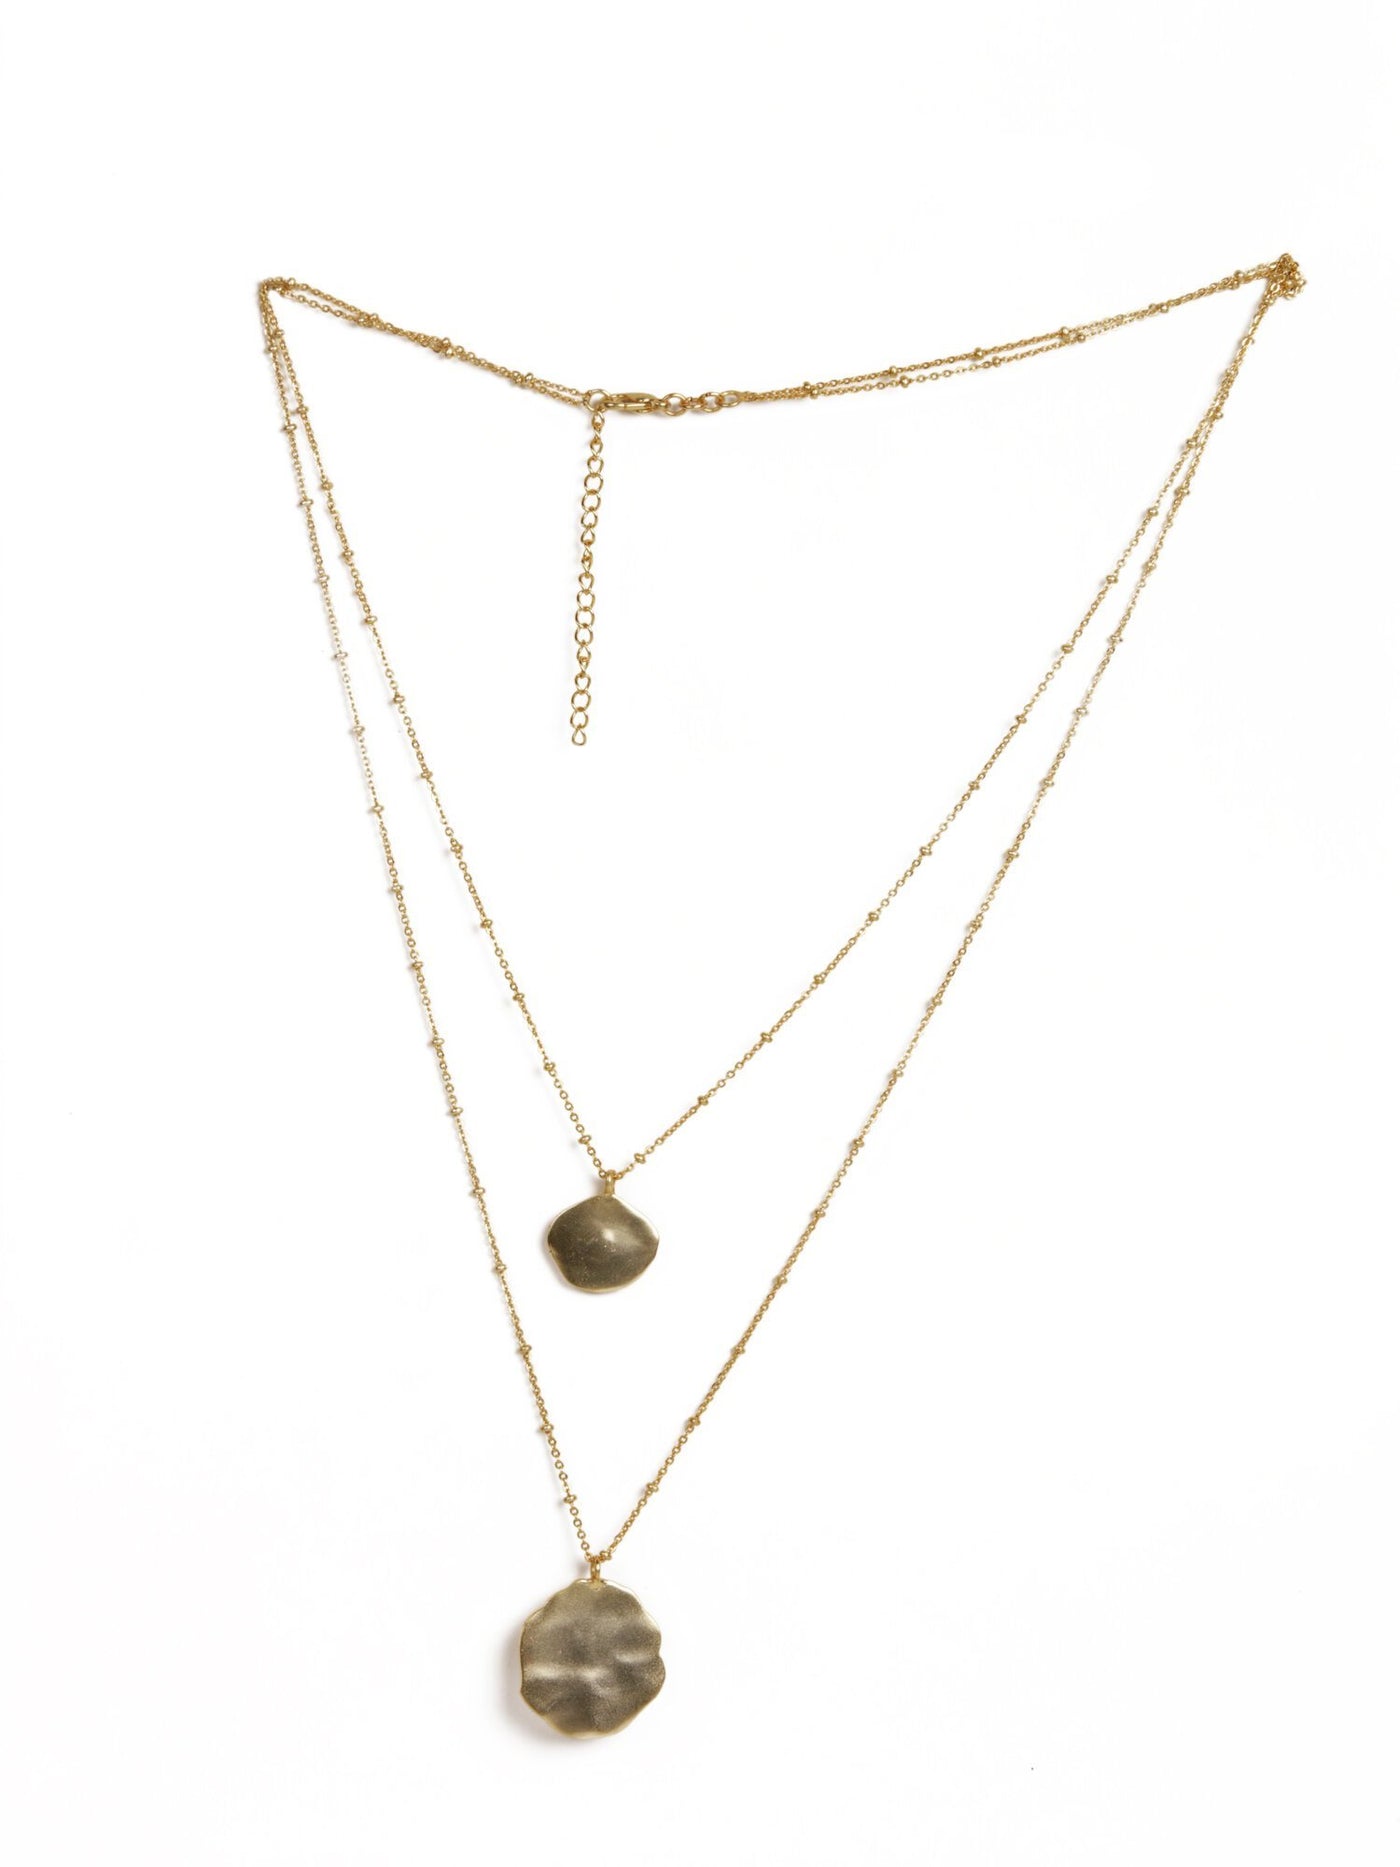 Scintillating Layered Gold Necklace - Stilskii